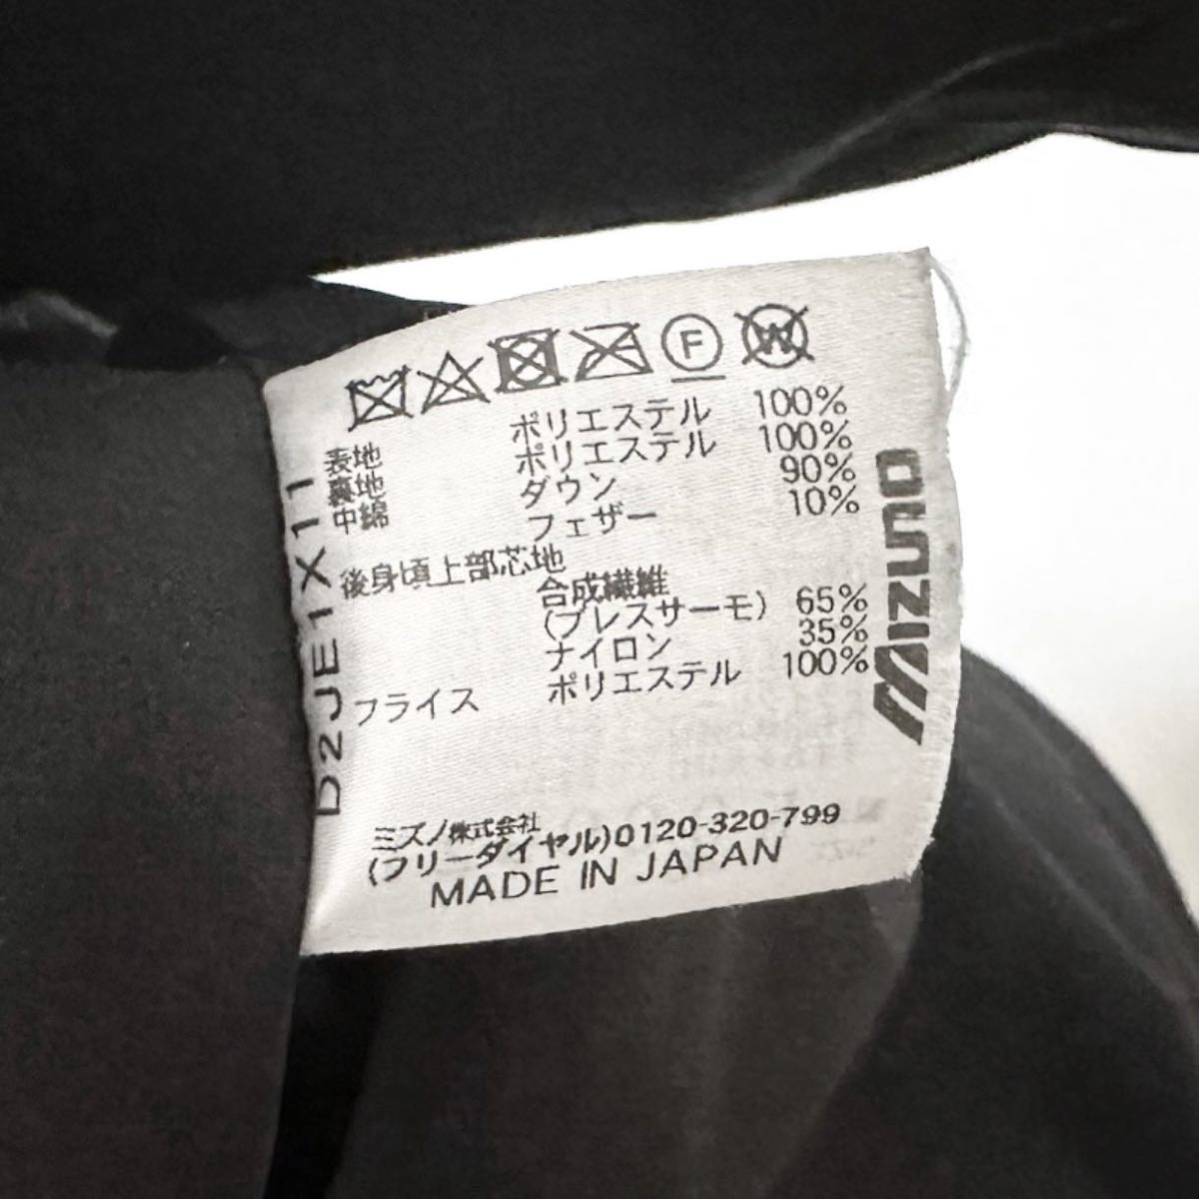 beautiful people × Mizuno ダウンジャケット ビューティフルピープル ミズノ ryo takashima ブラック  モッズコート サイズ40